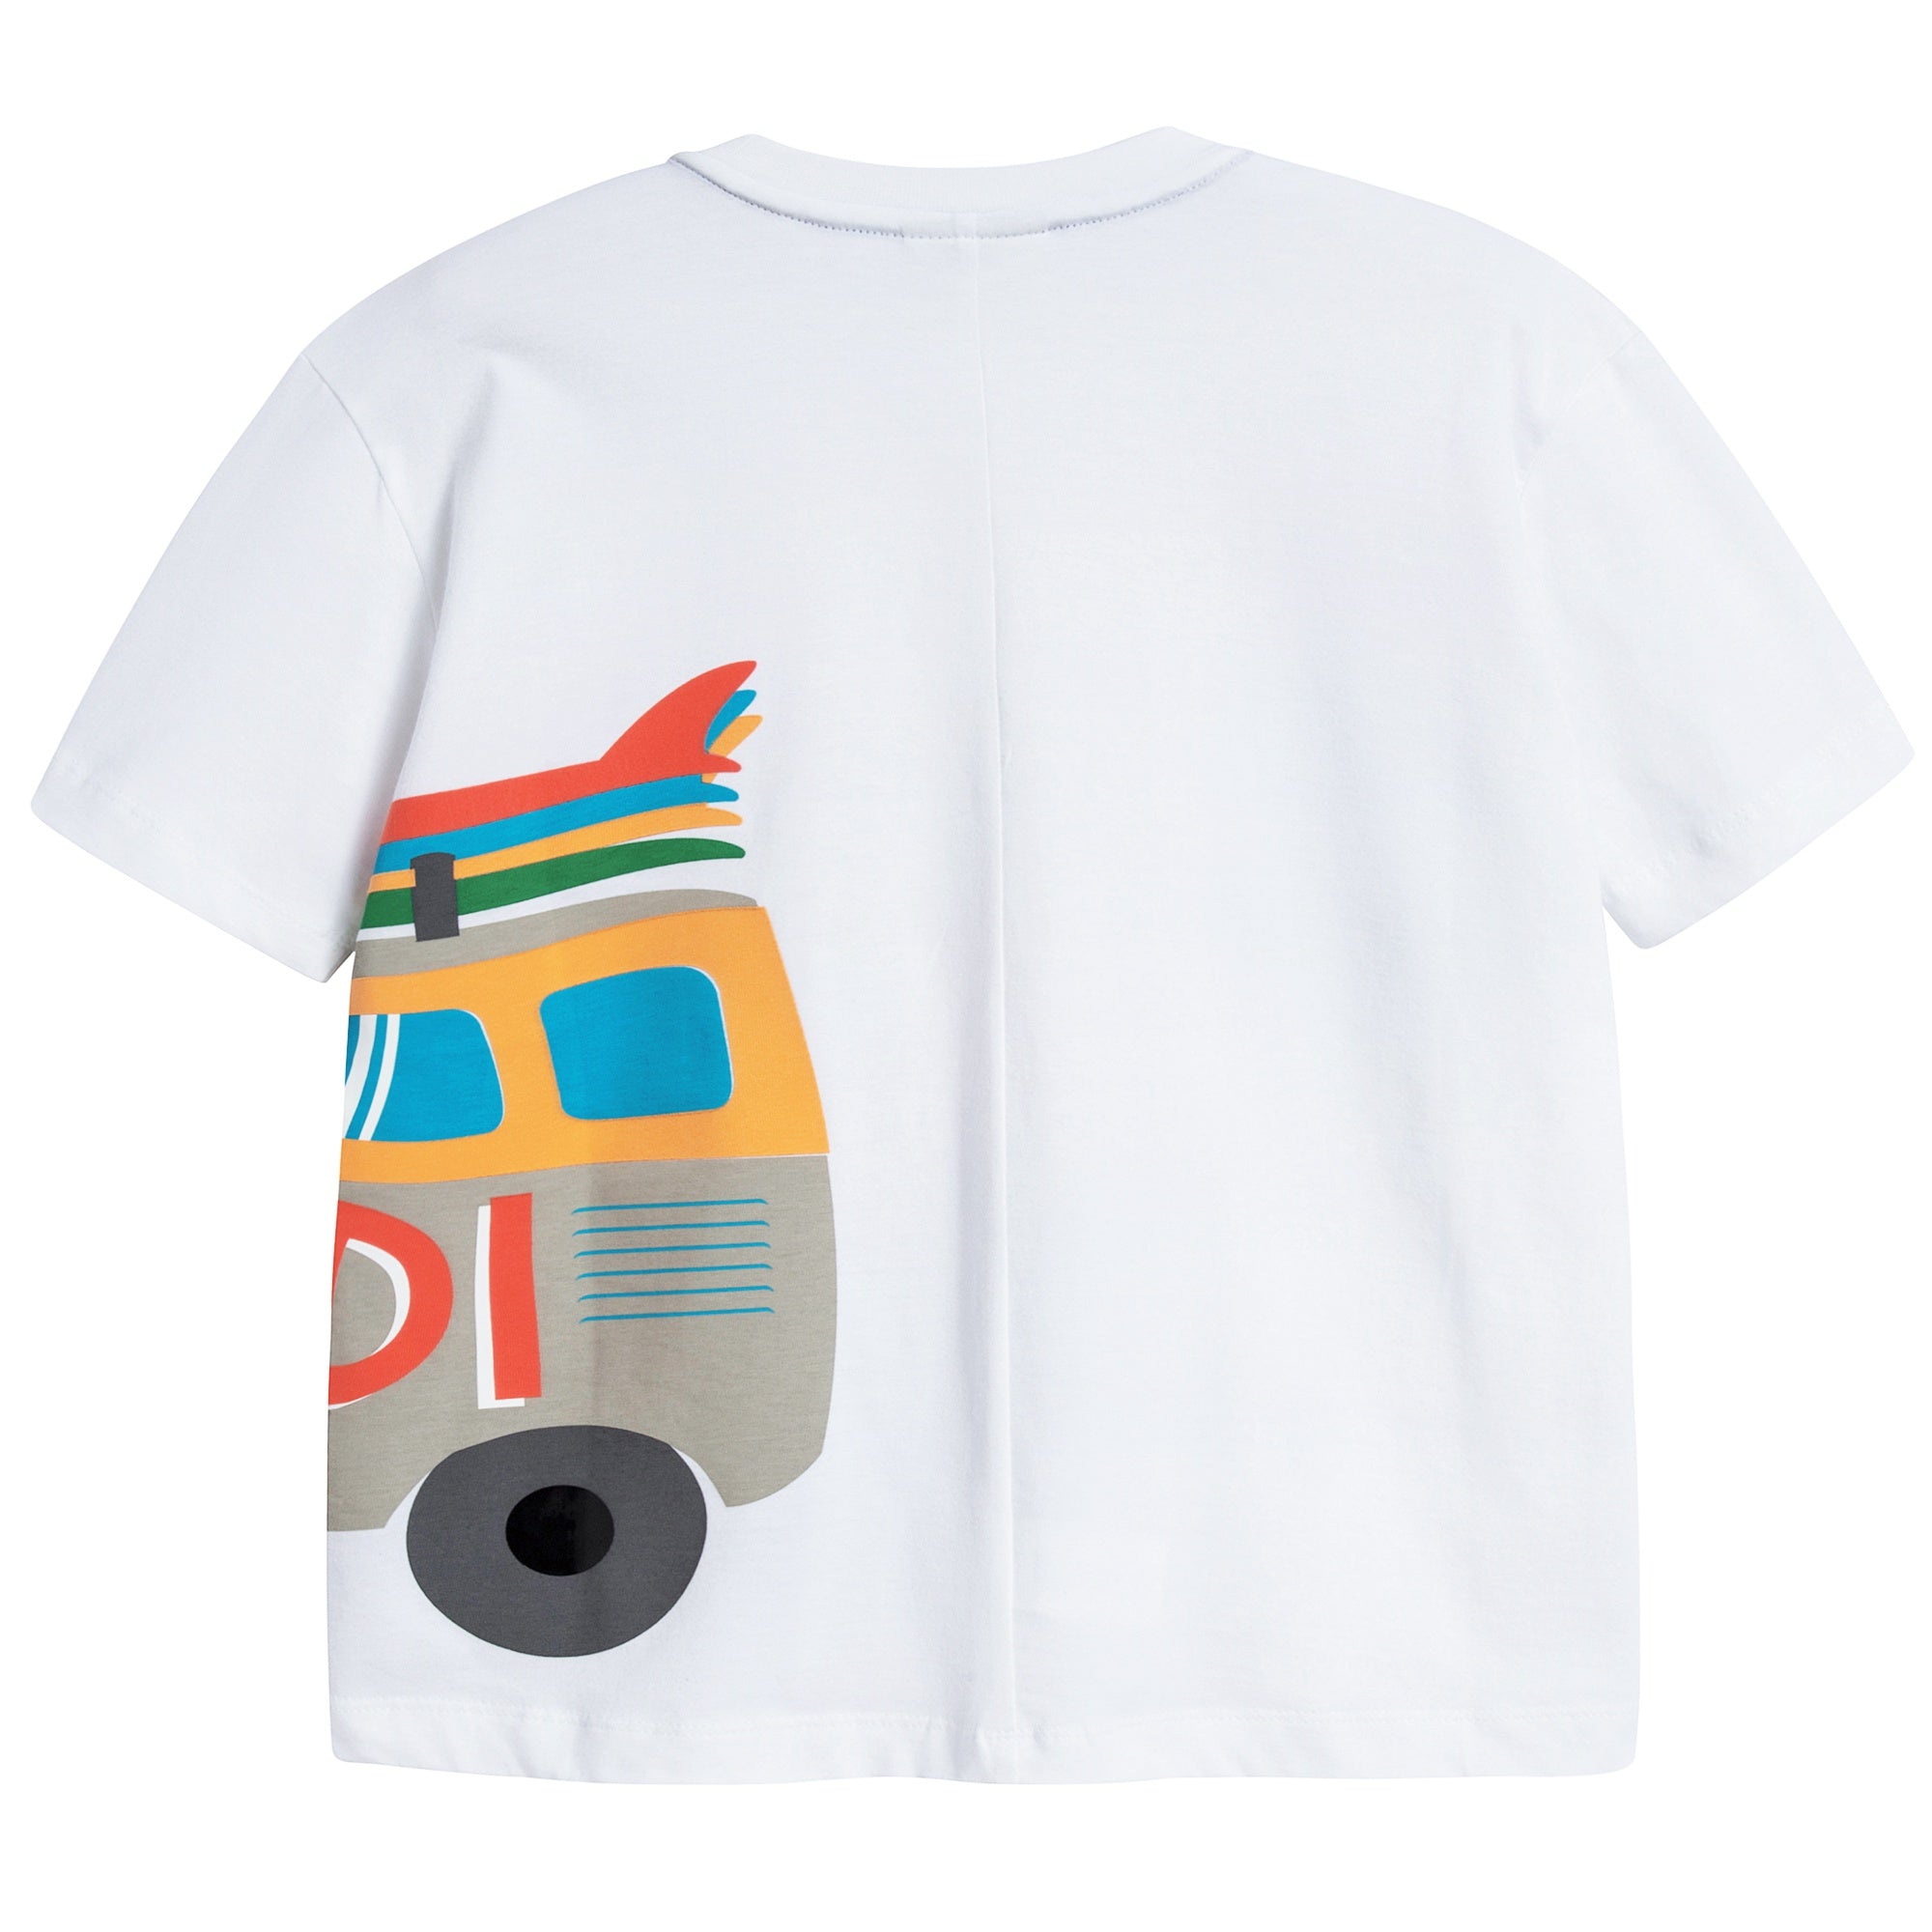 Boys White "Bus" Printed Cotton T-shirt